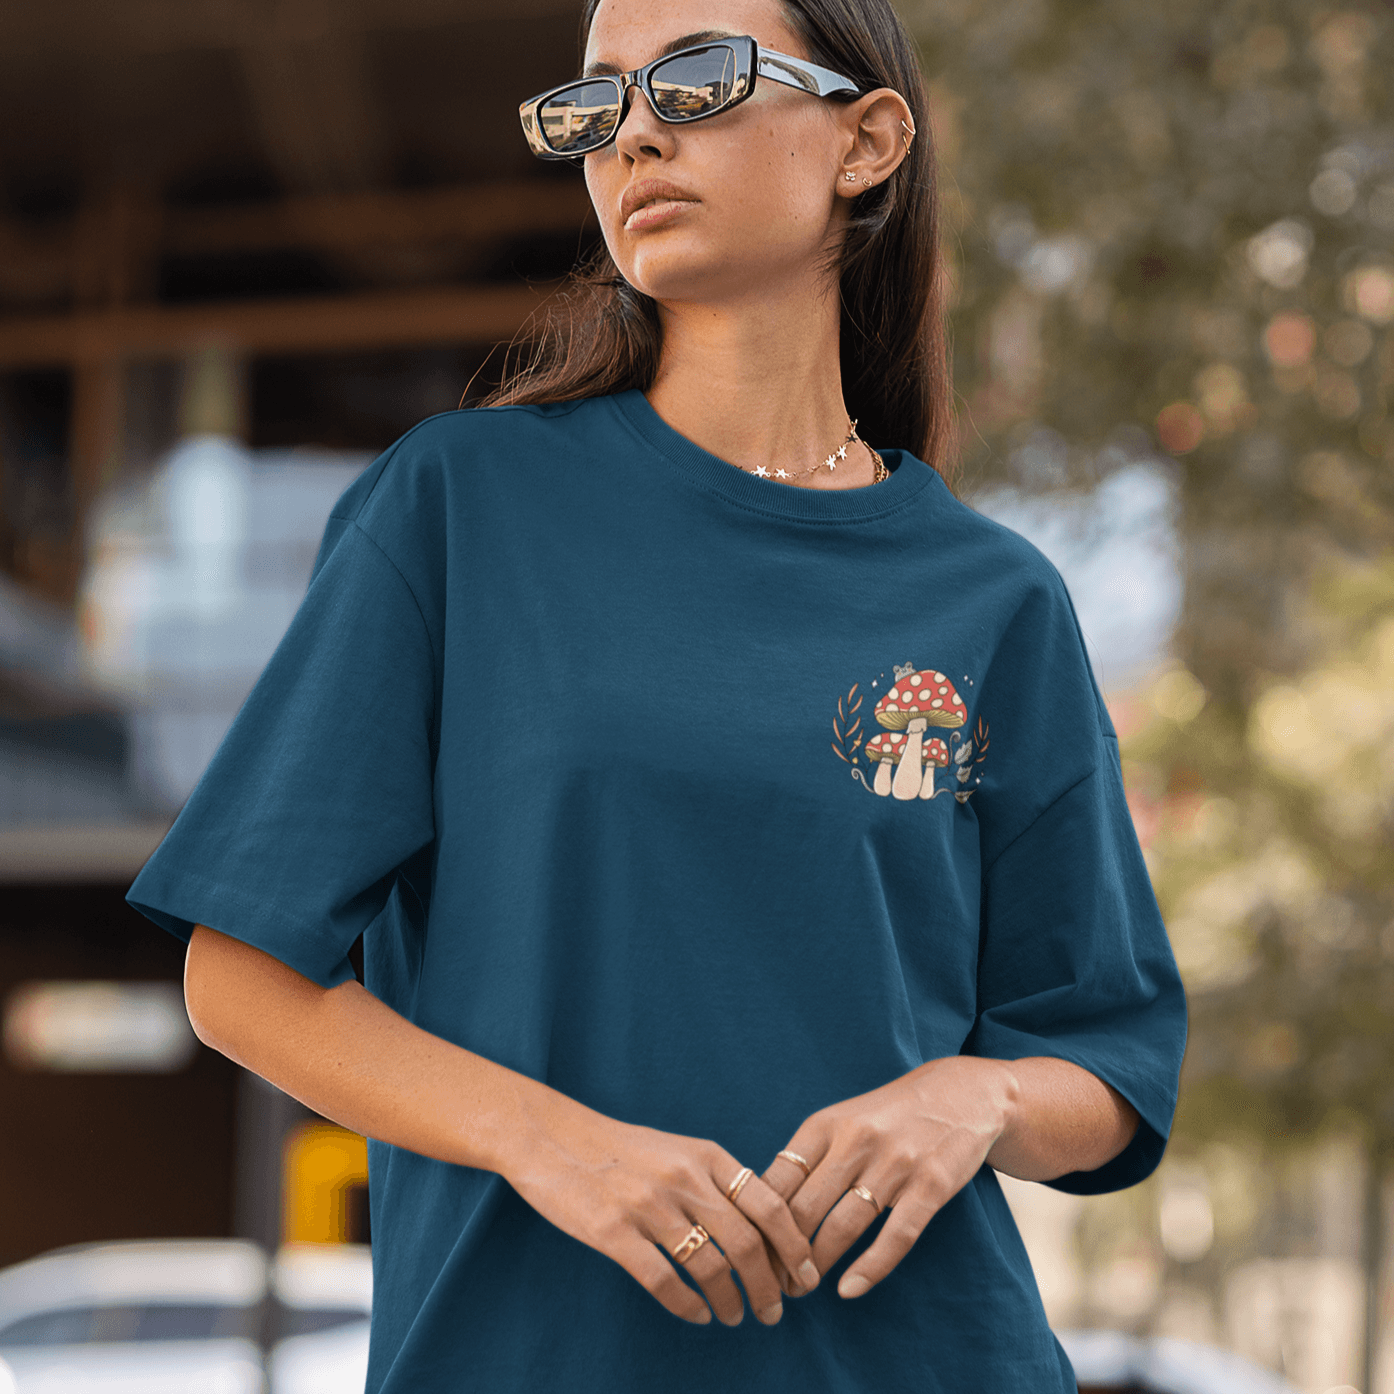 Bloom Wild Back Printed Oversized T-shirts - Unisex - Cute Stuff India